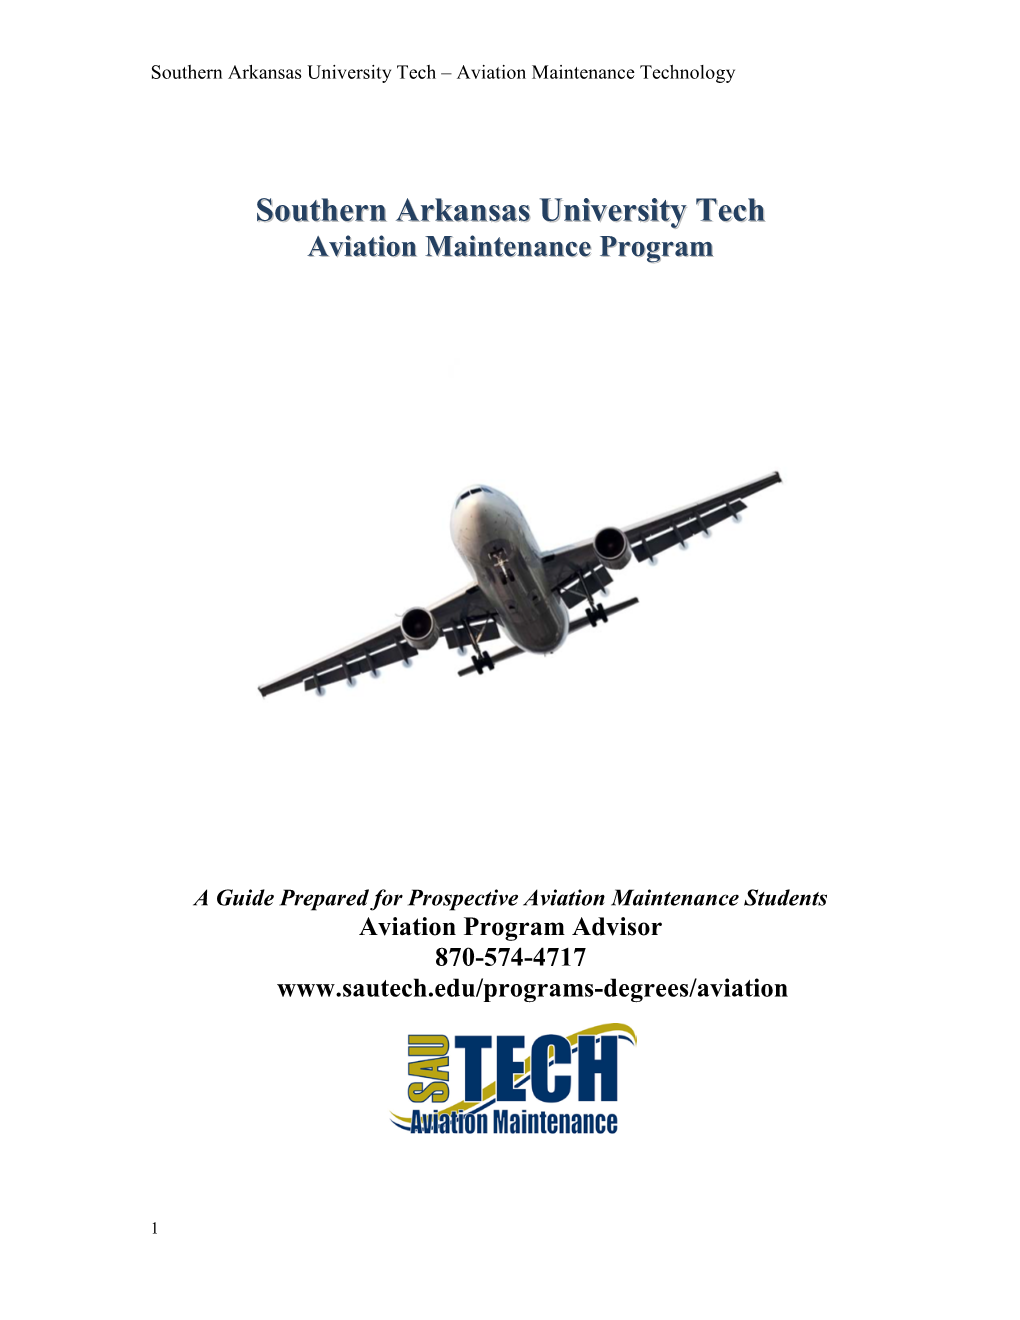 Southern Arkansas University Tech Aviation Maintenance Program